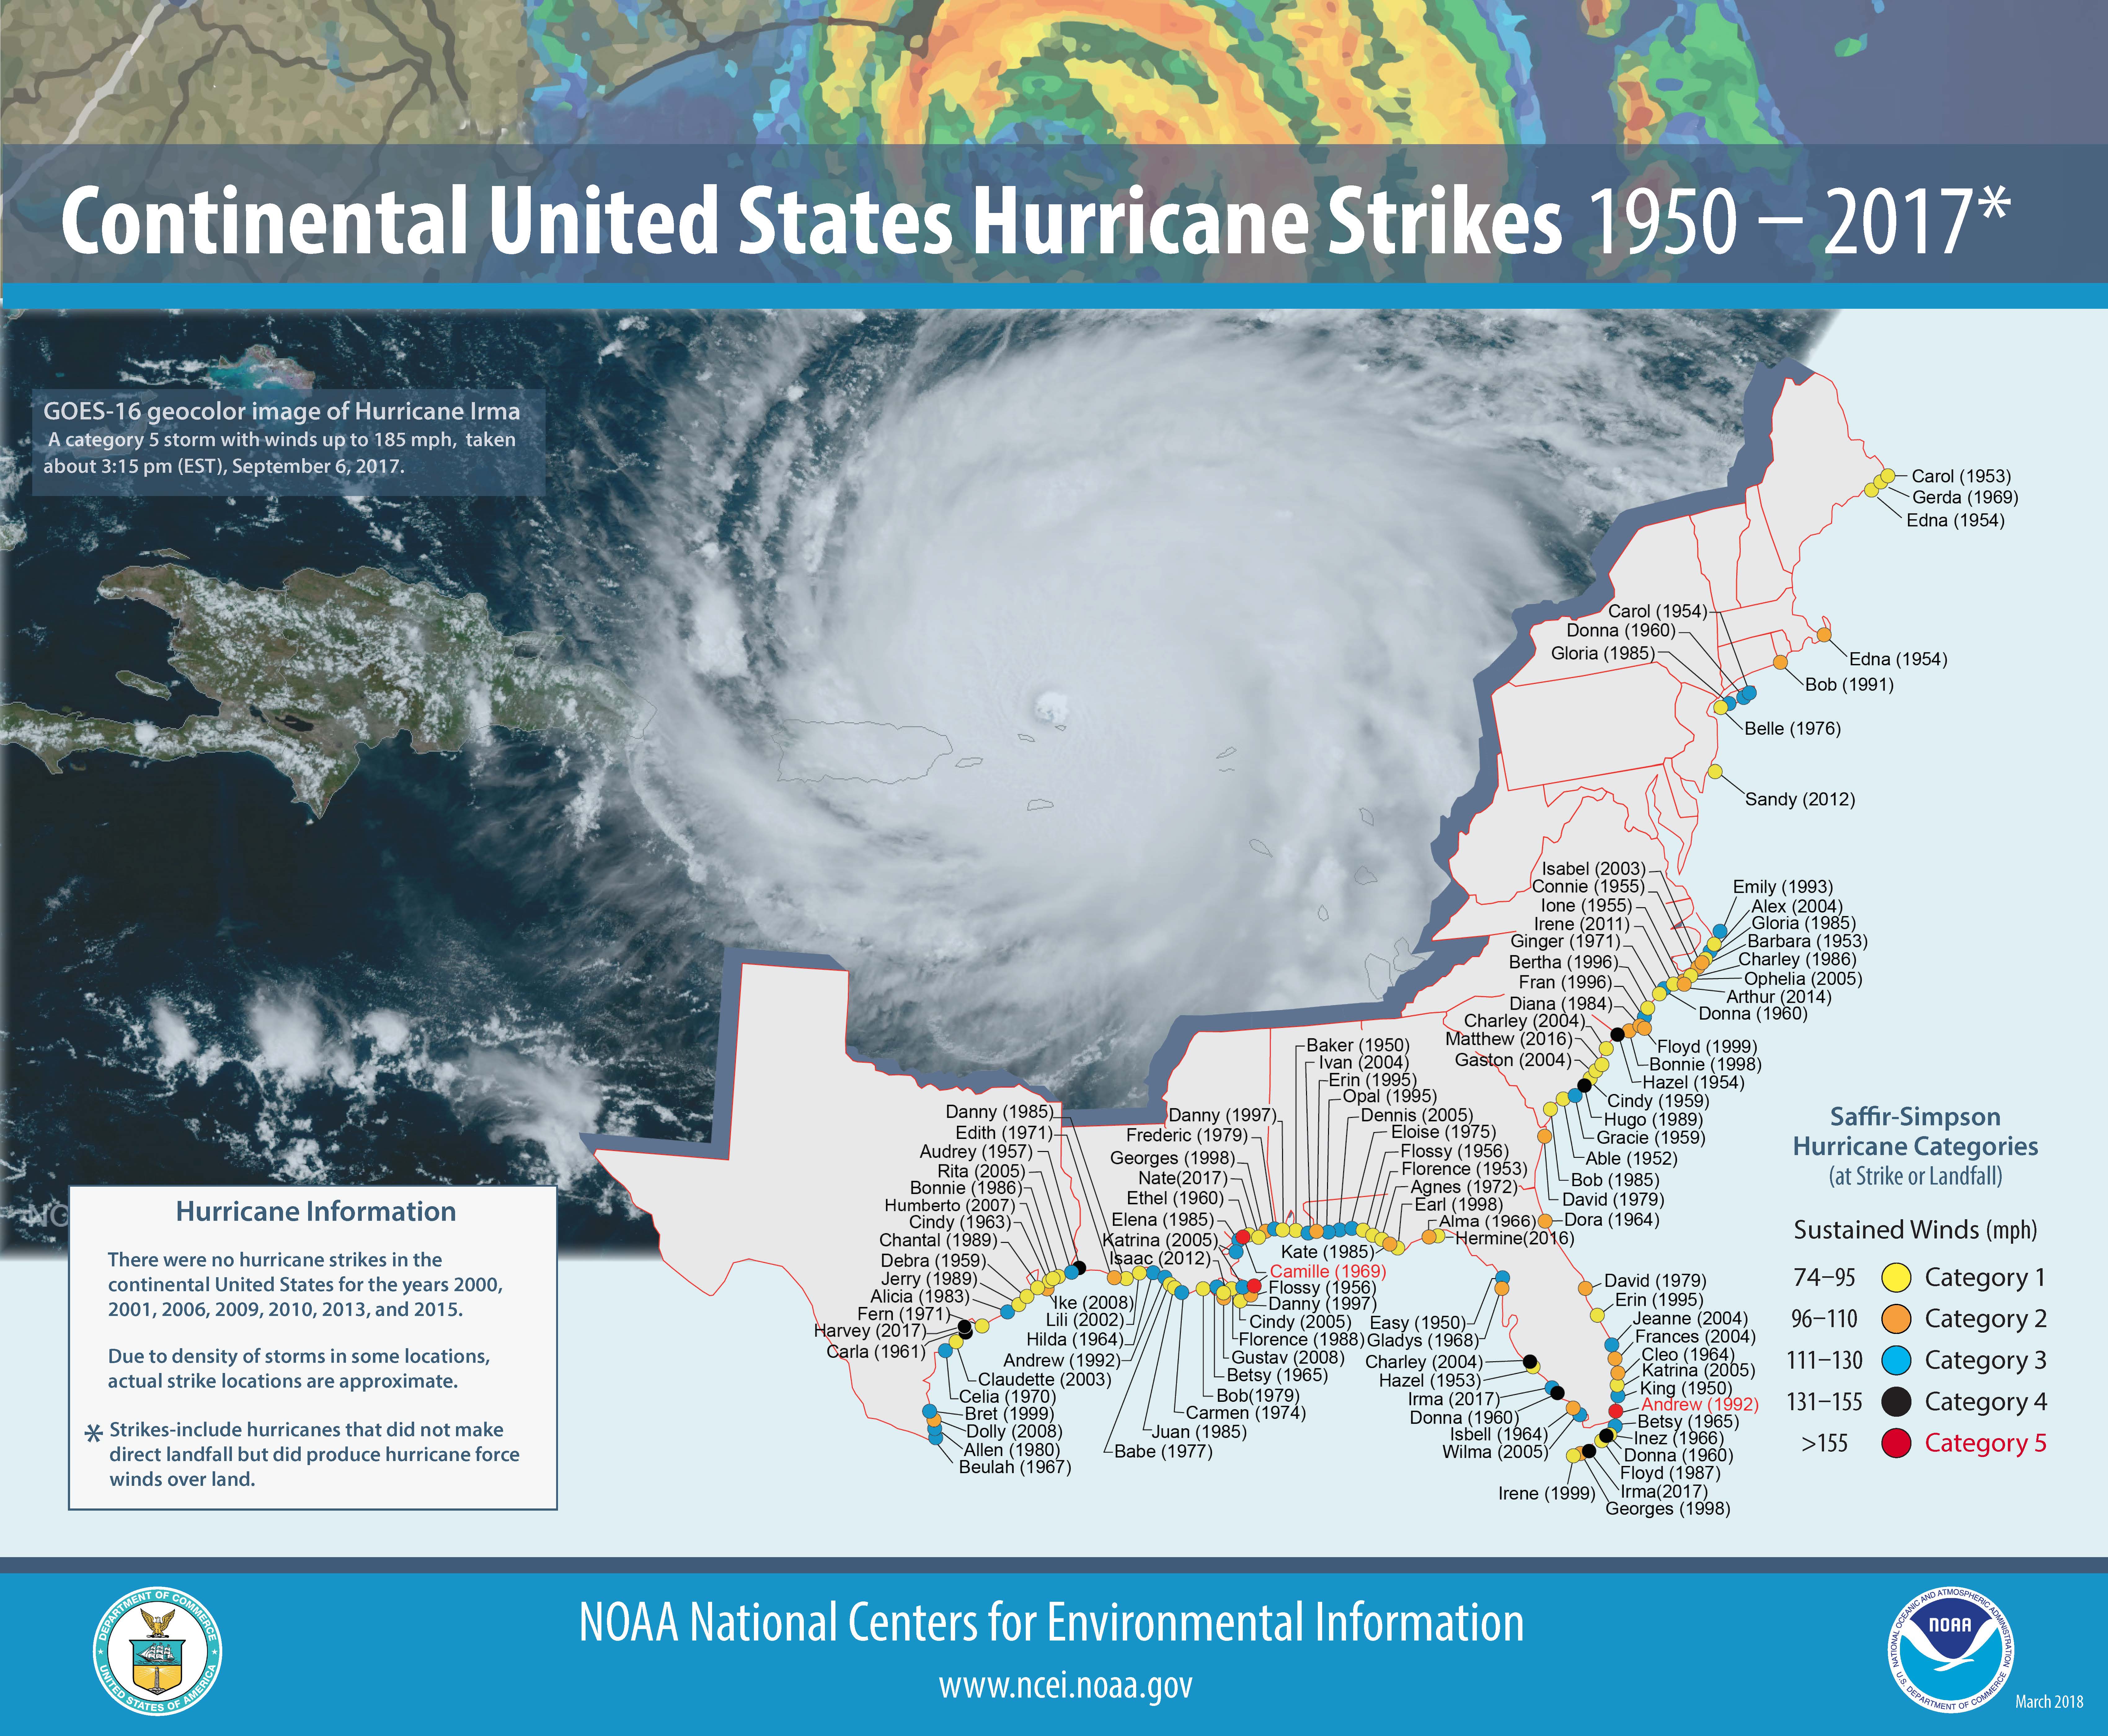 [Map of 1950-2017 CONUS Hurricane Strikes]